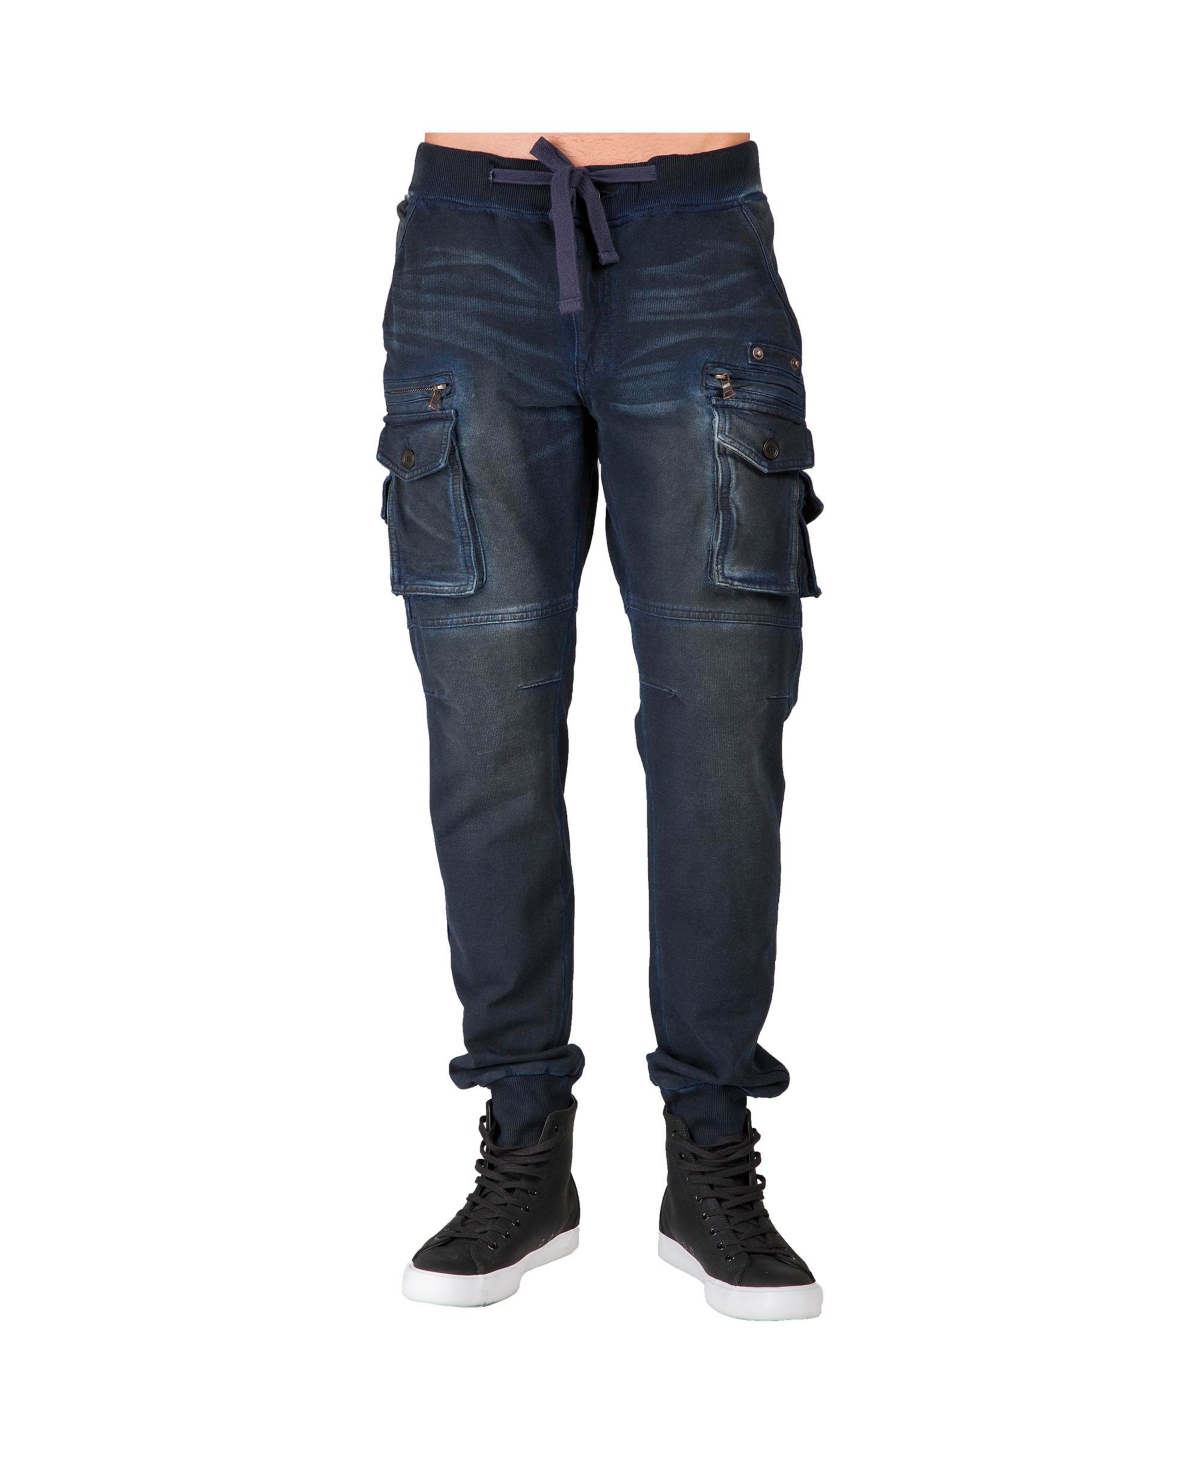 Men's Premium Knit Denim Jogger Jeans Indigo Vintage-like Cargo Zipper Pockets - Midnight blue